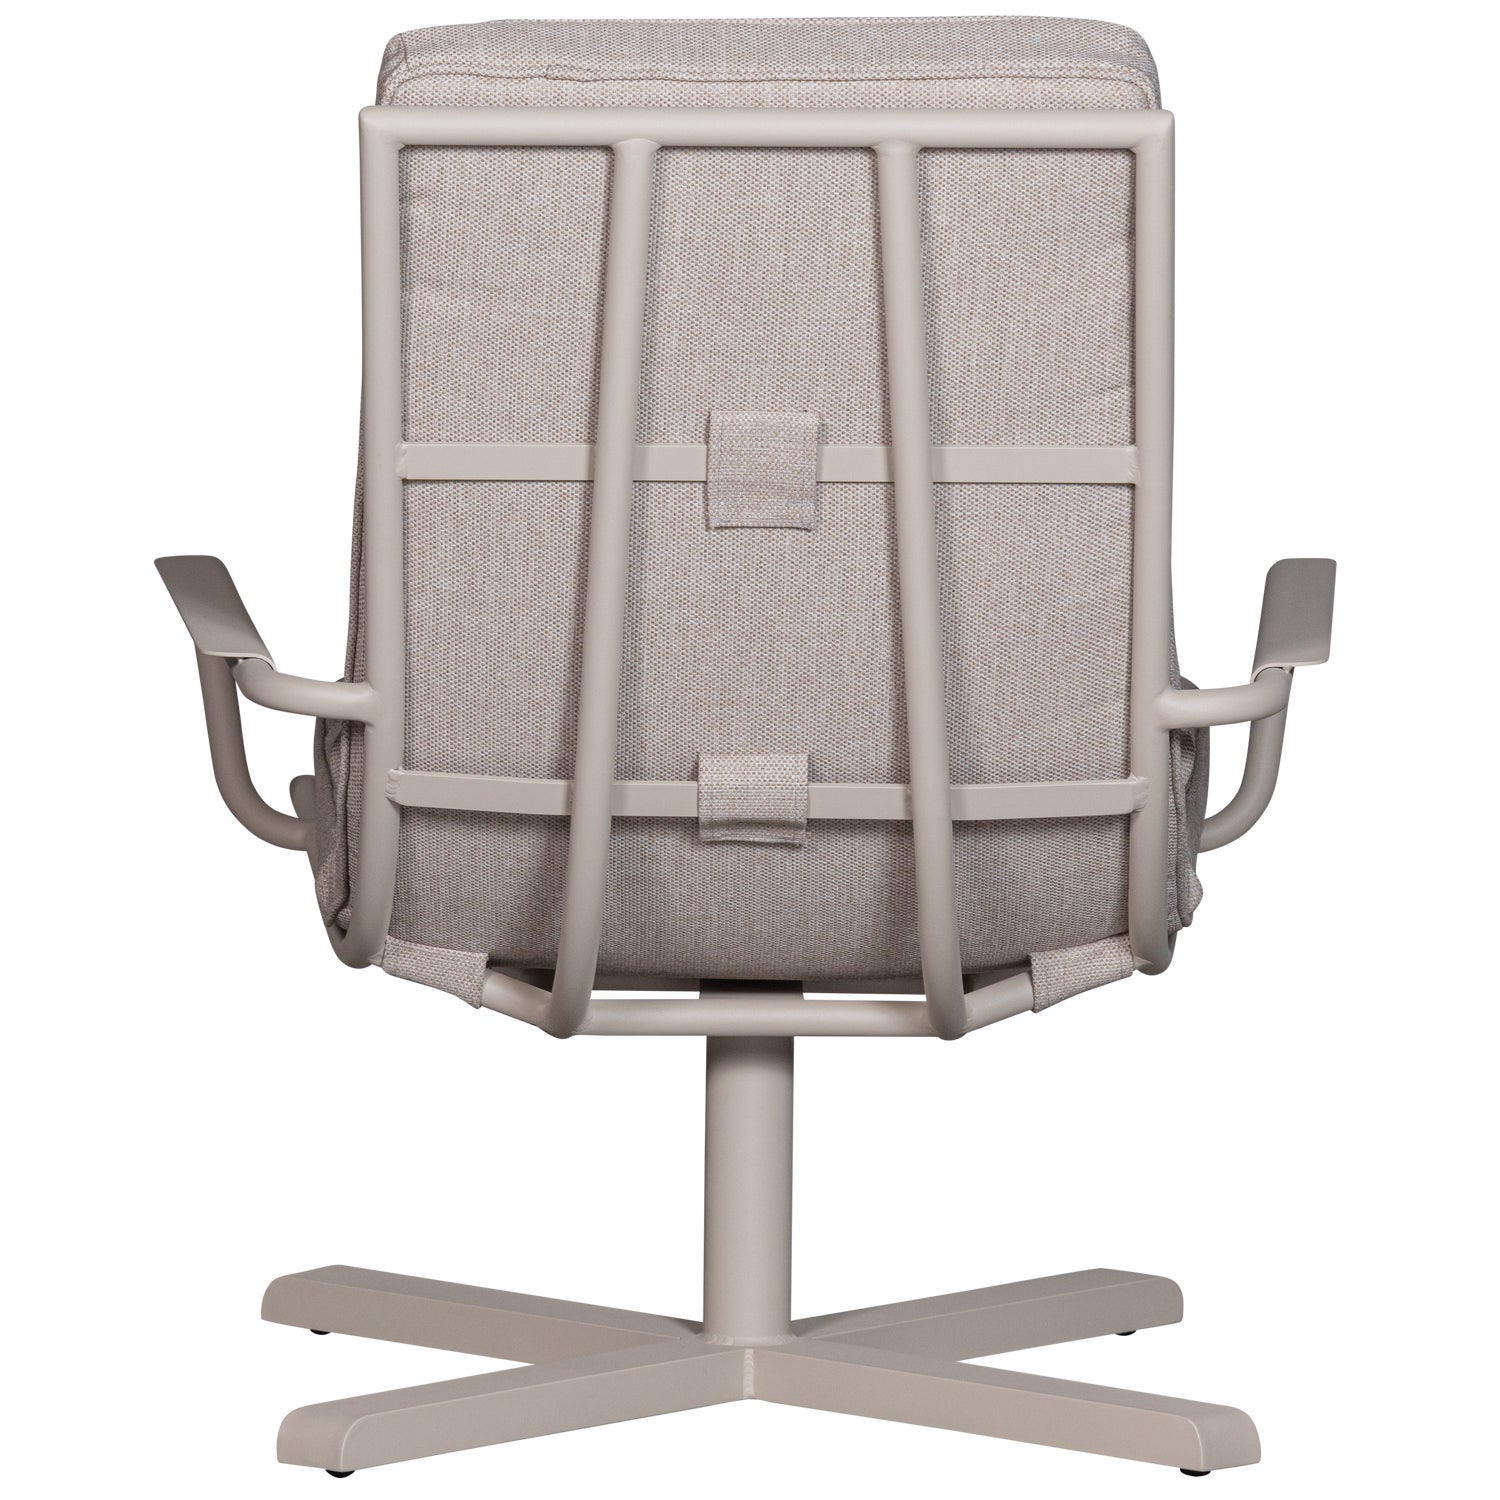 500009-Z-04_VS_EXT_Coosa_fauteuil_alluminium_zand_AK1.png?auto=webp&format=png&width=1500&height=1500